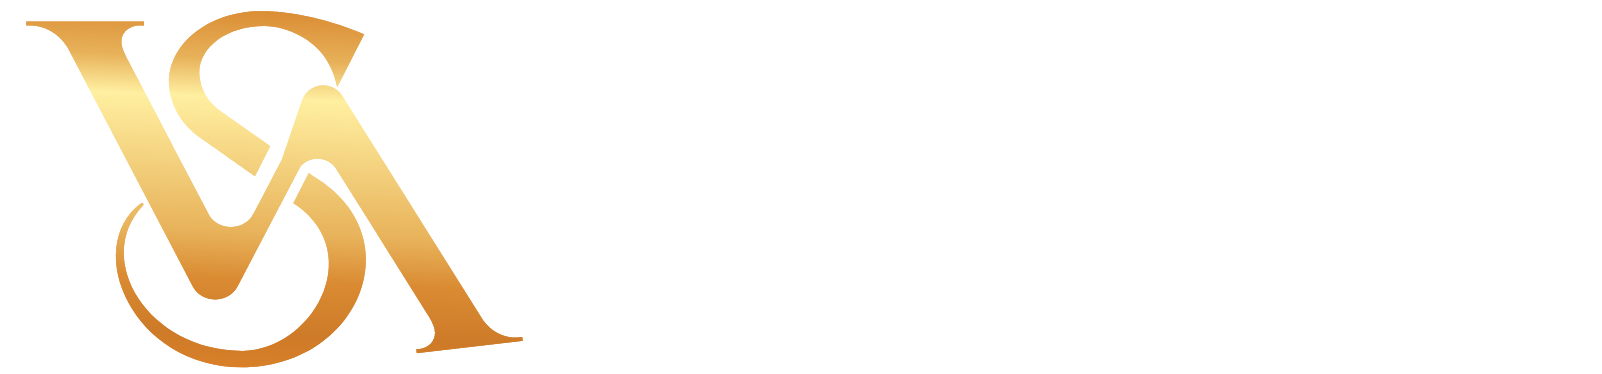 Vidhinyas Solicitors & Associates